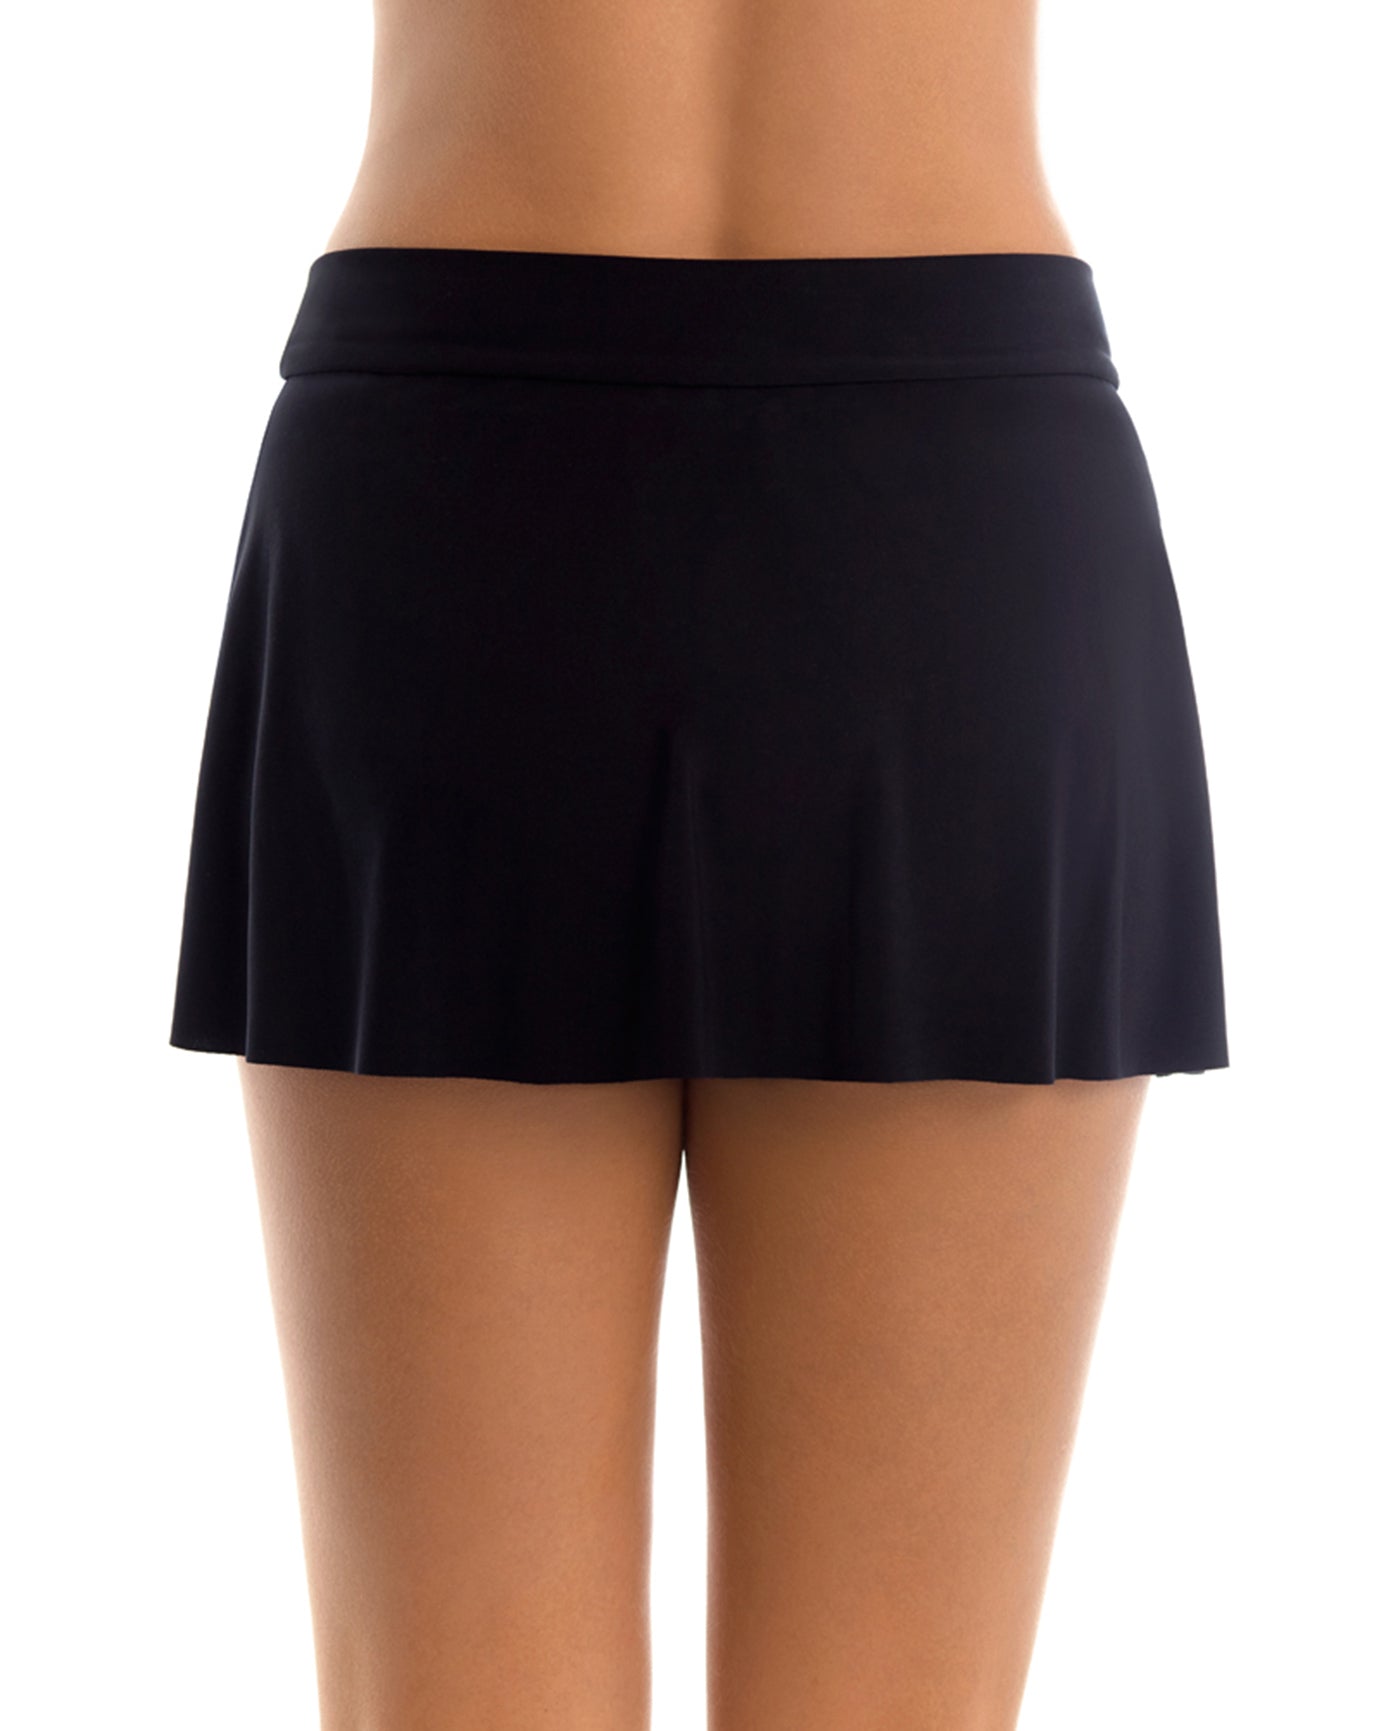 Back View Of Magicsuit Black Tennis Swim Skirt | MAG Black